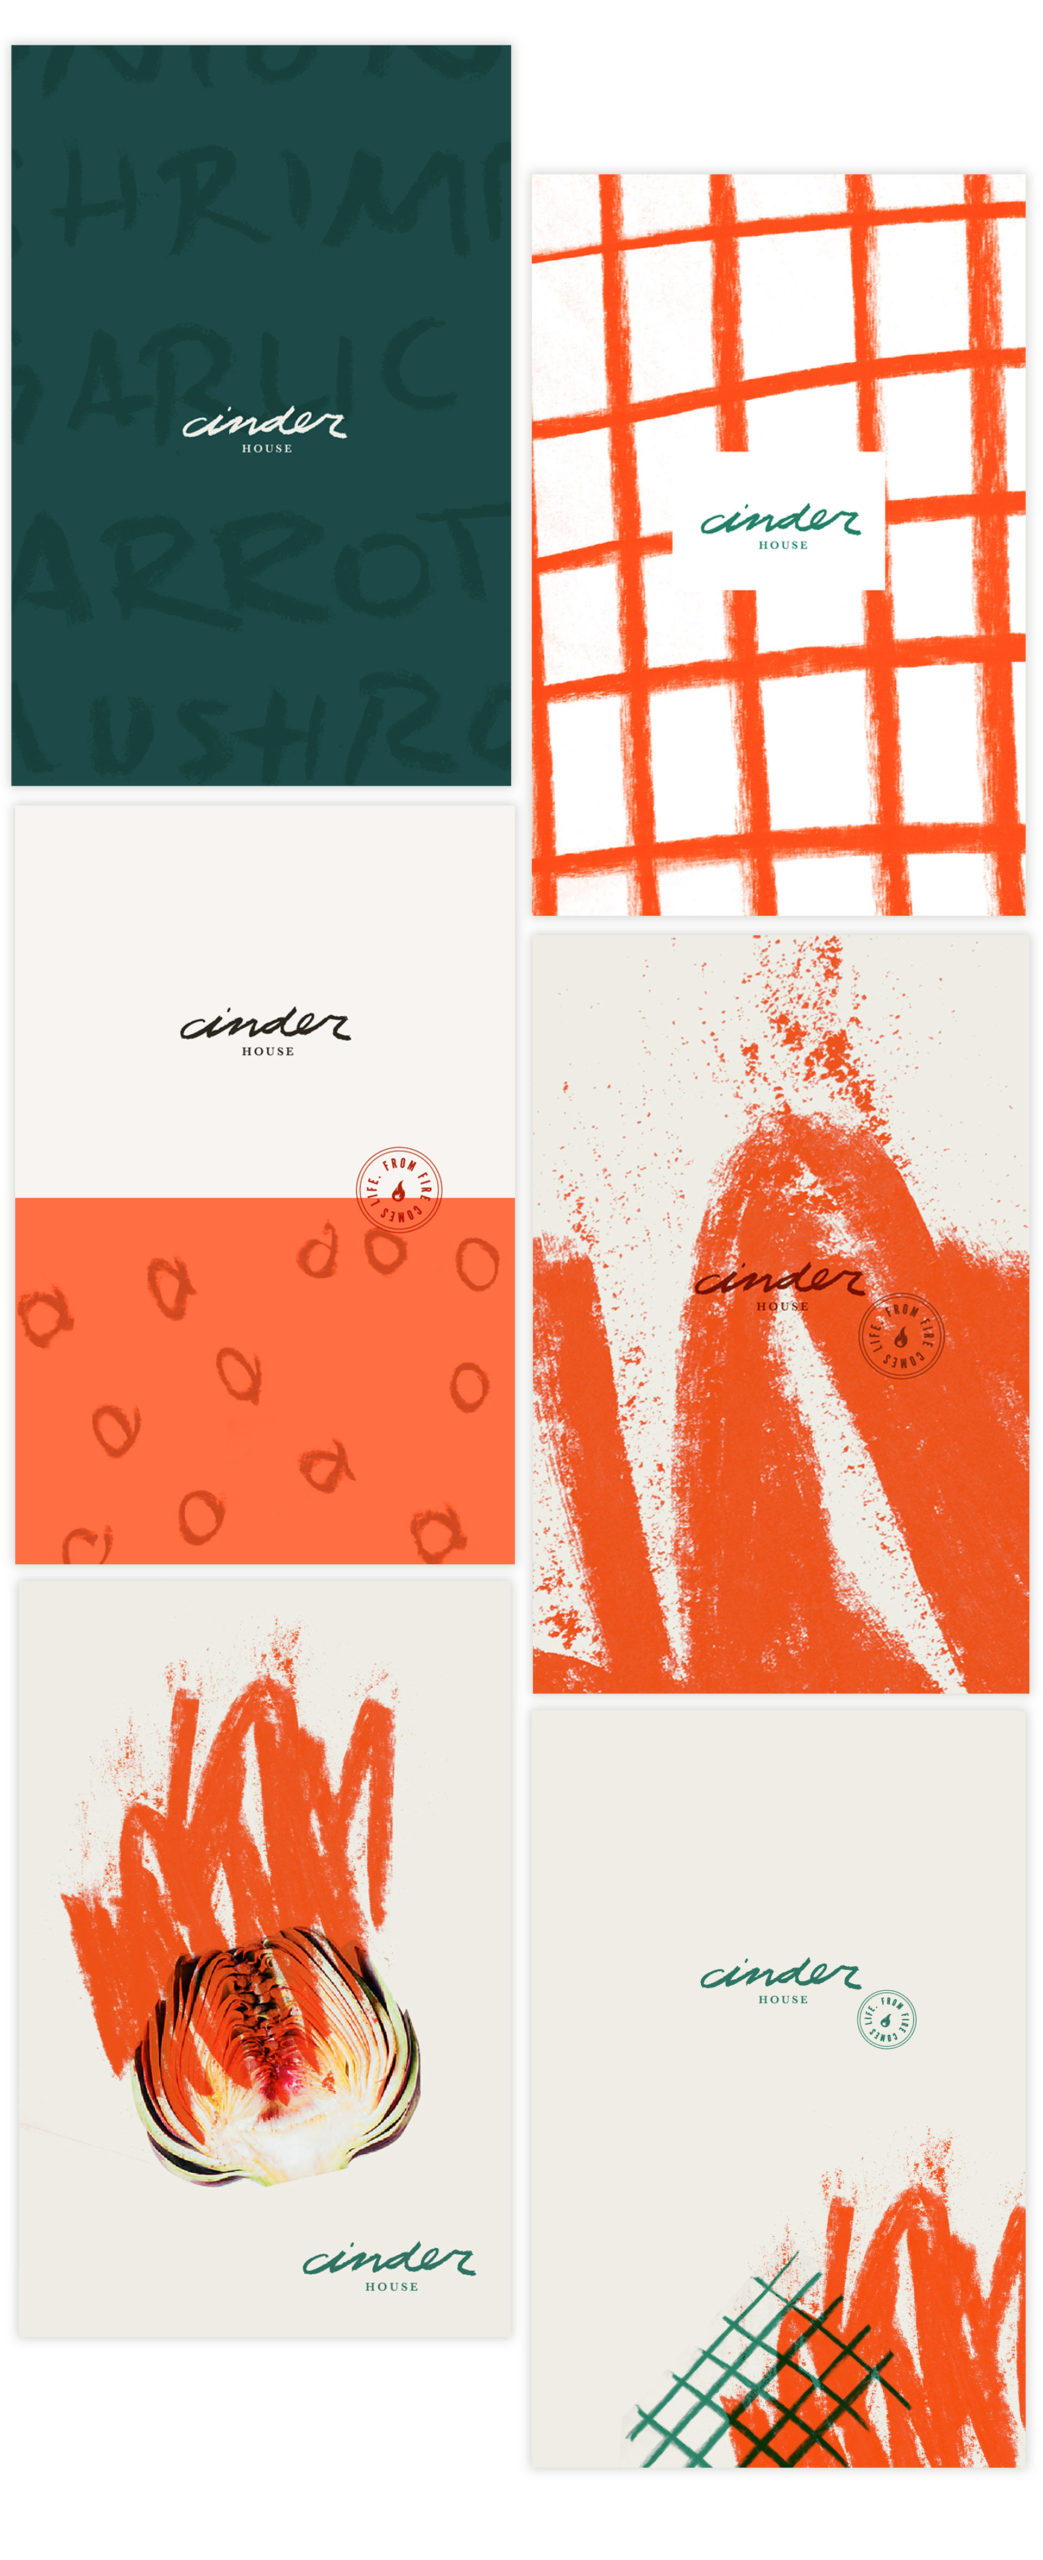 Cinder House menu design concepts using charcoal sketches